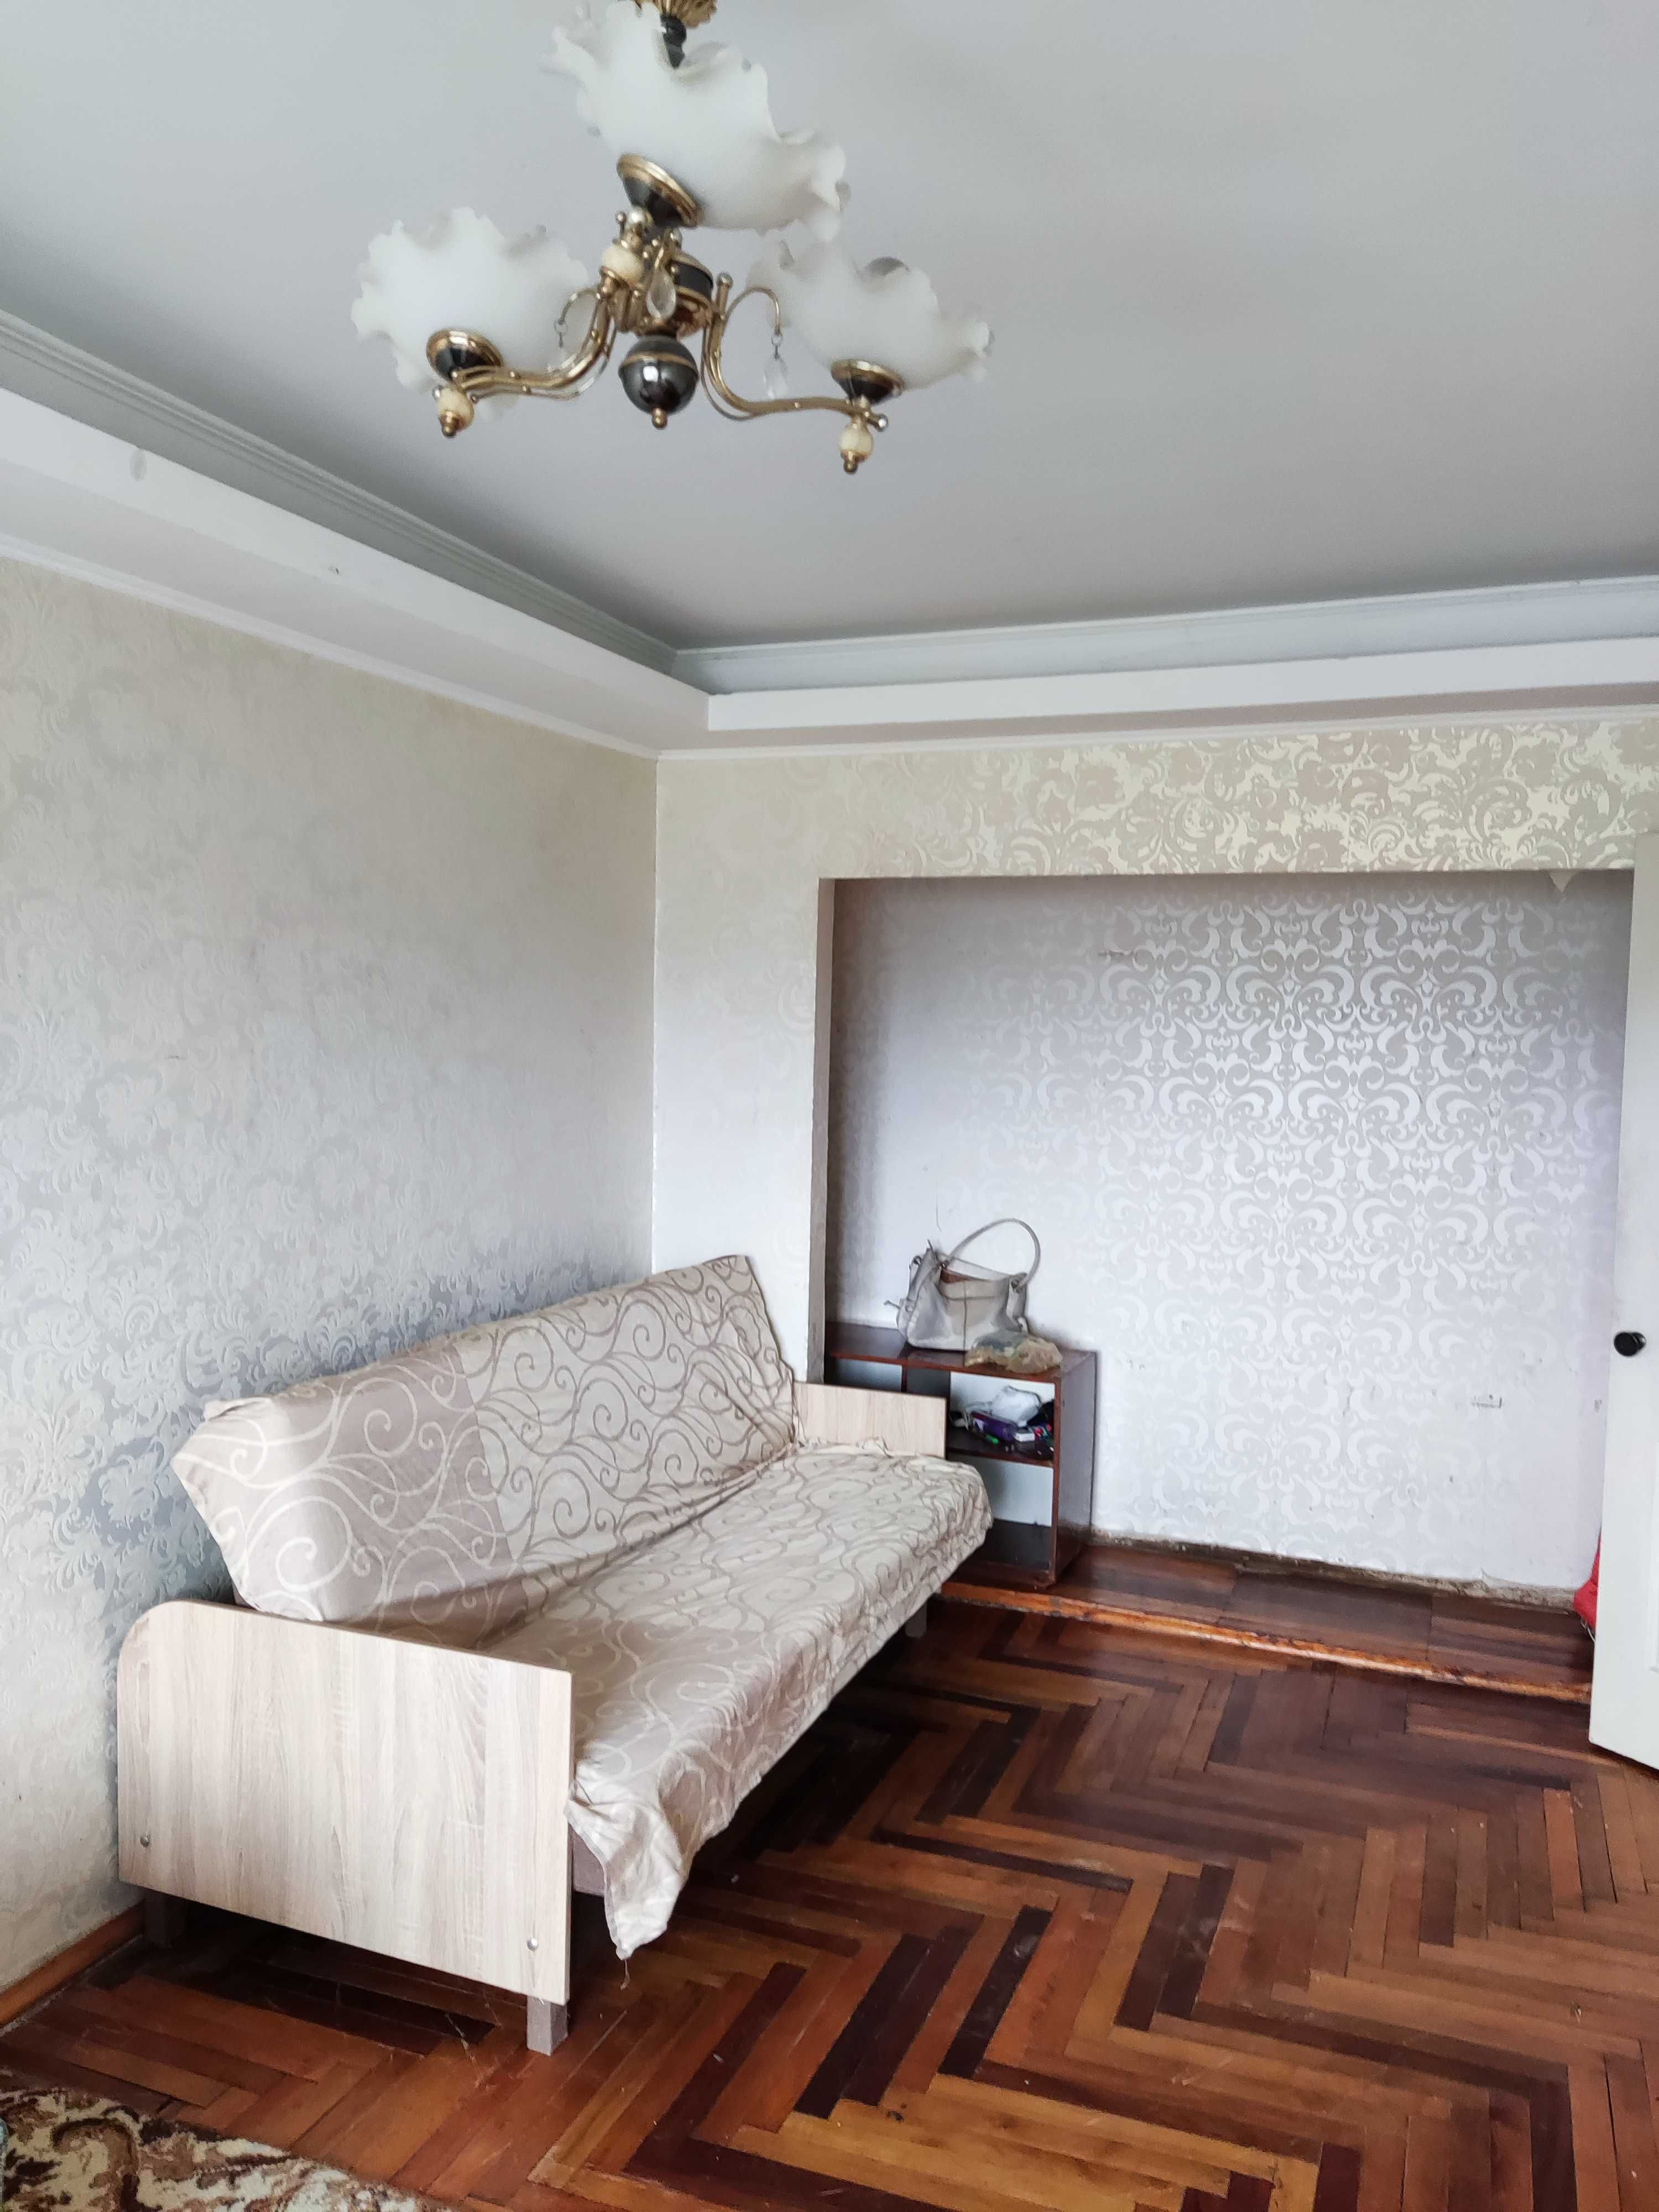 Сдам 1-комнатную квартиру в Александровском районе 5500 грн.